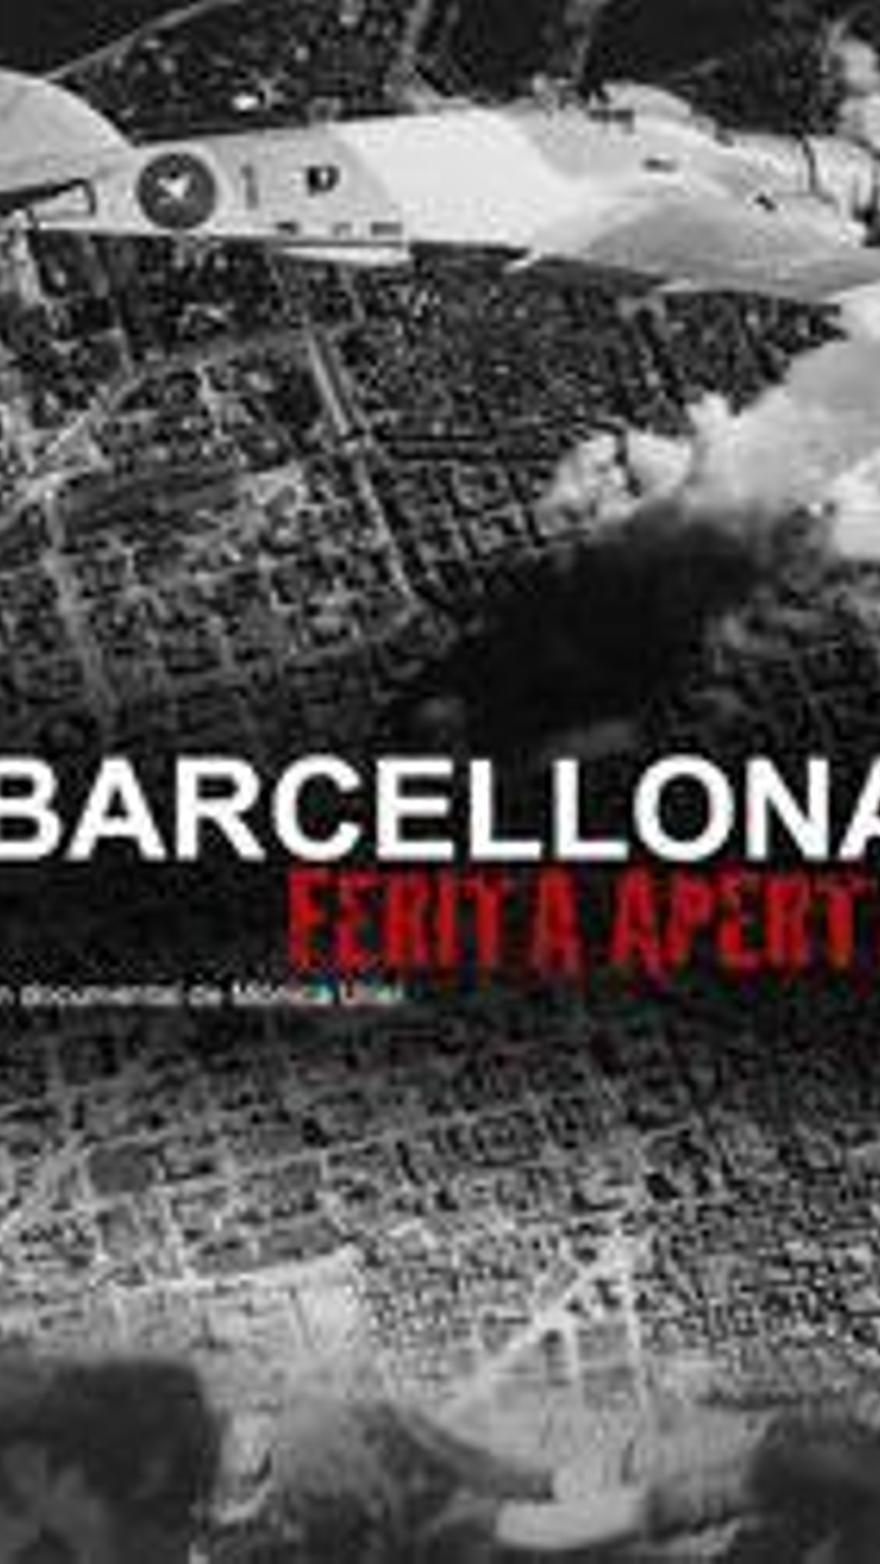 Barcelona ferida oberta